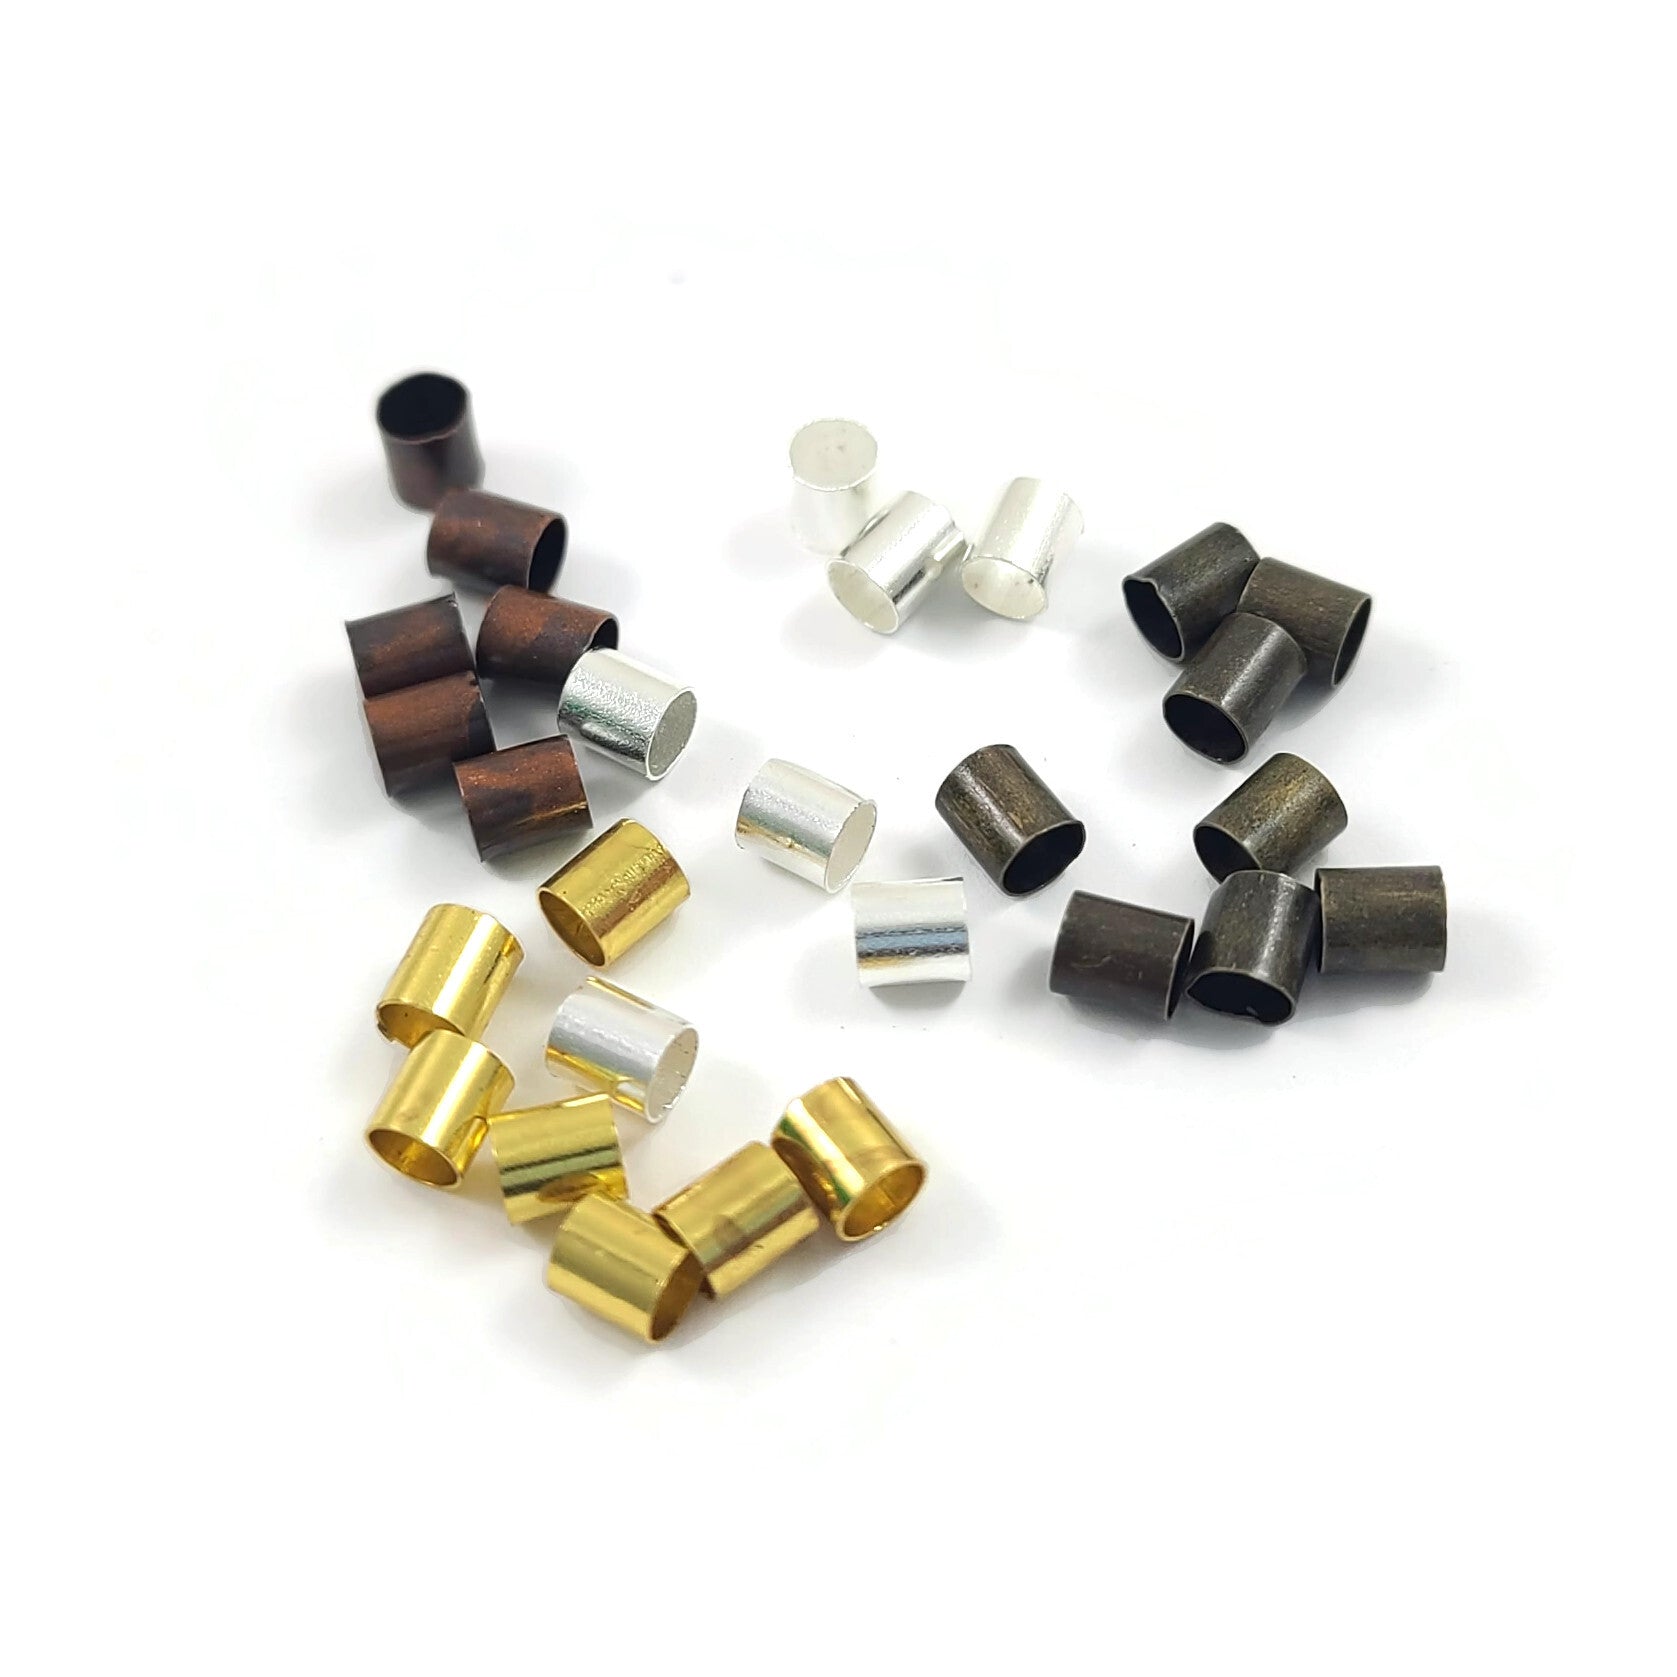 3mm crimp tube beads, Nickel free, Hypoallergenic jewelry findings